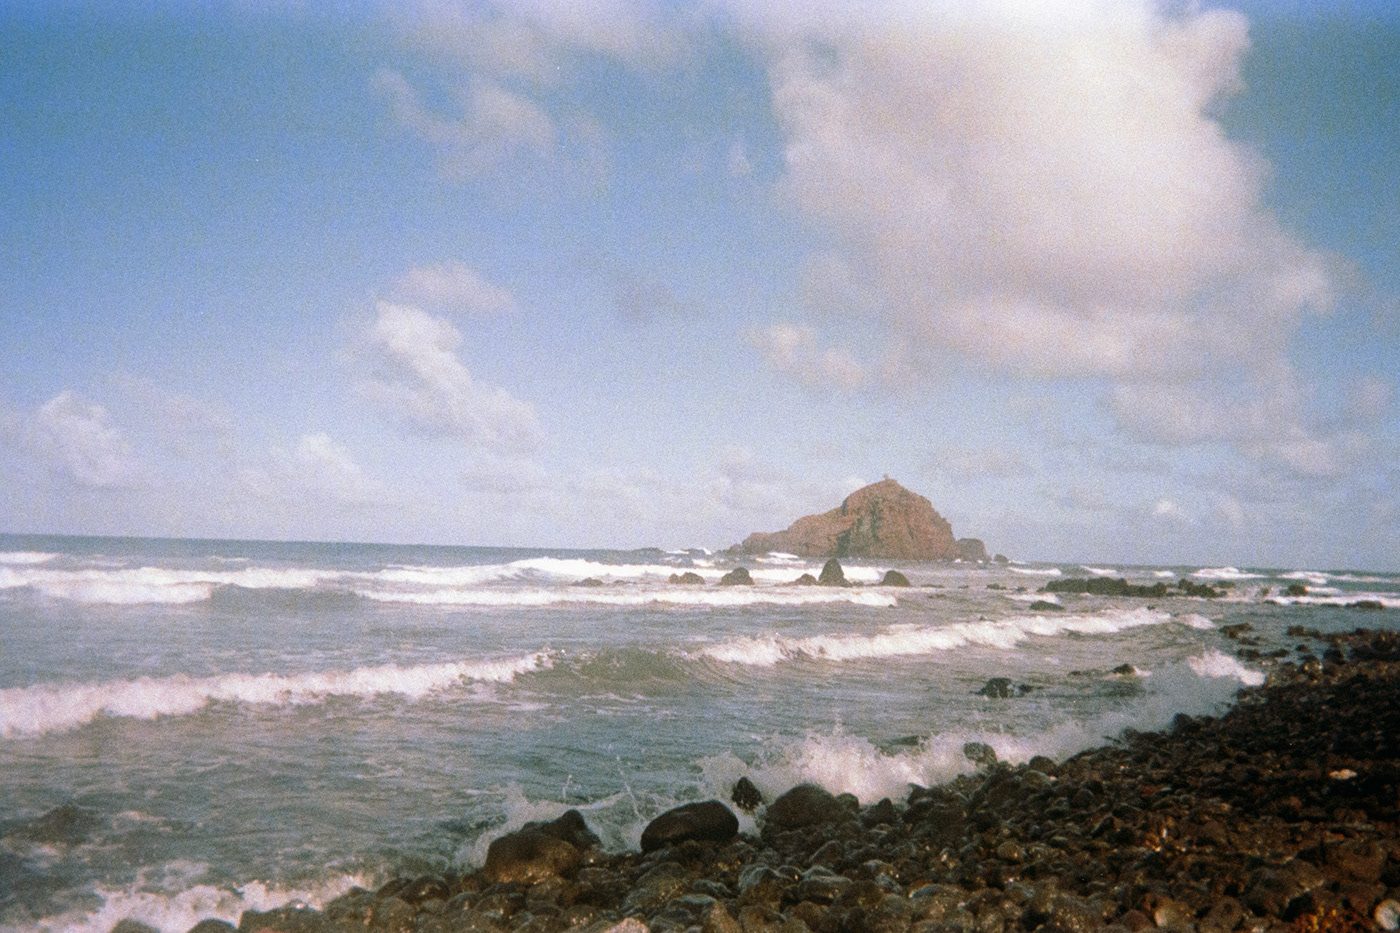 maui Film   film photography HAWAII van life surfing beach Photography  Nā moku ʻehā solivagant jules